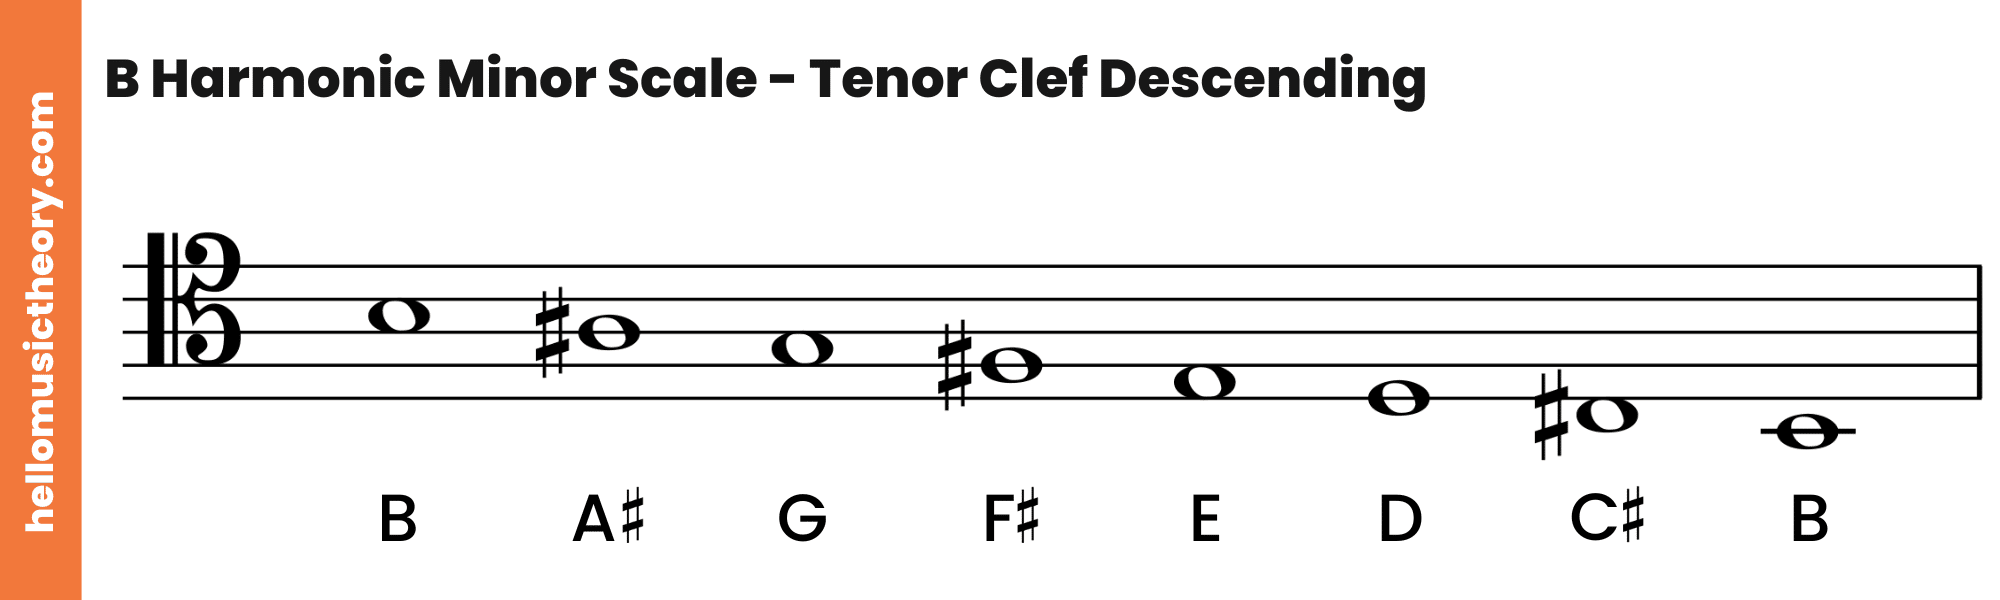 B Harmonic Minor Scale Tenor Clef Descending